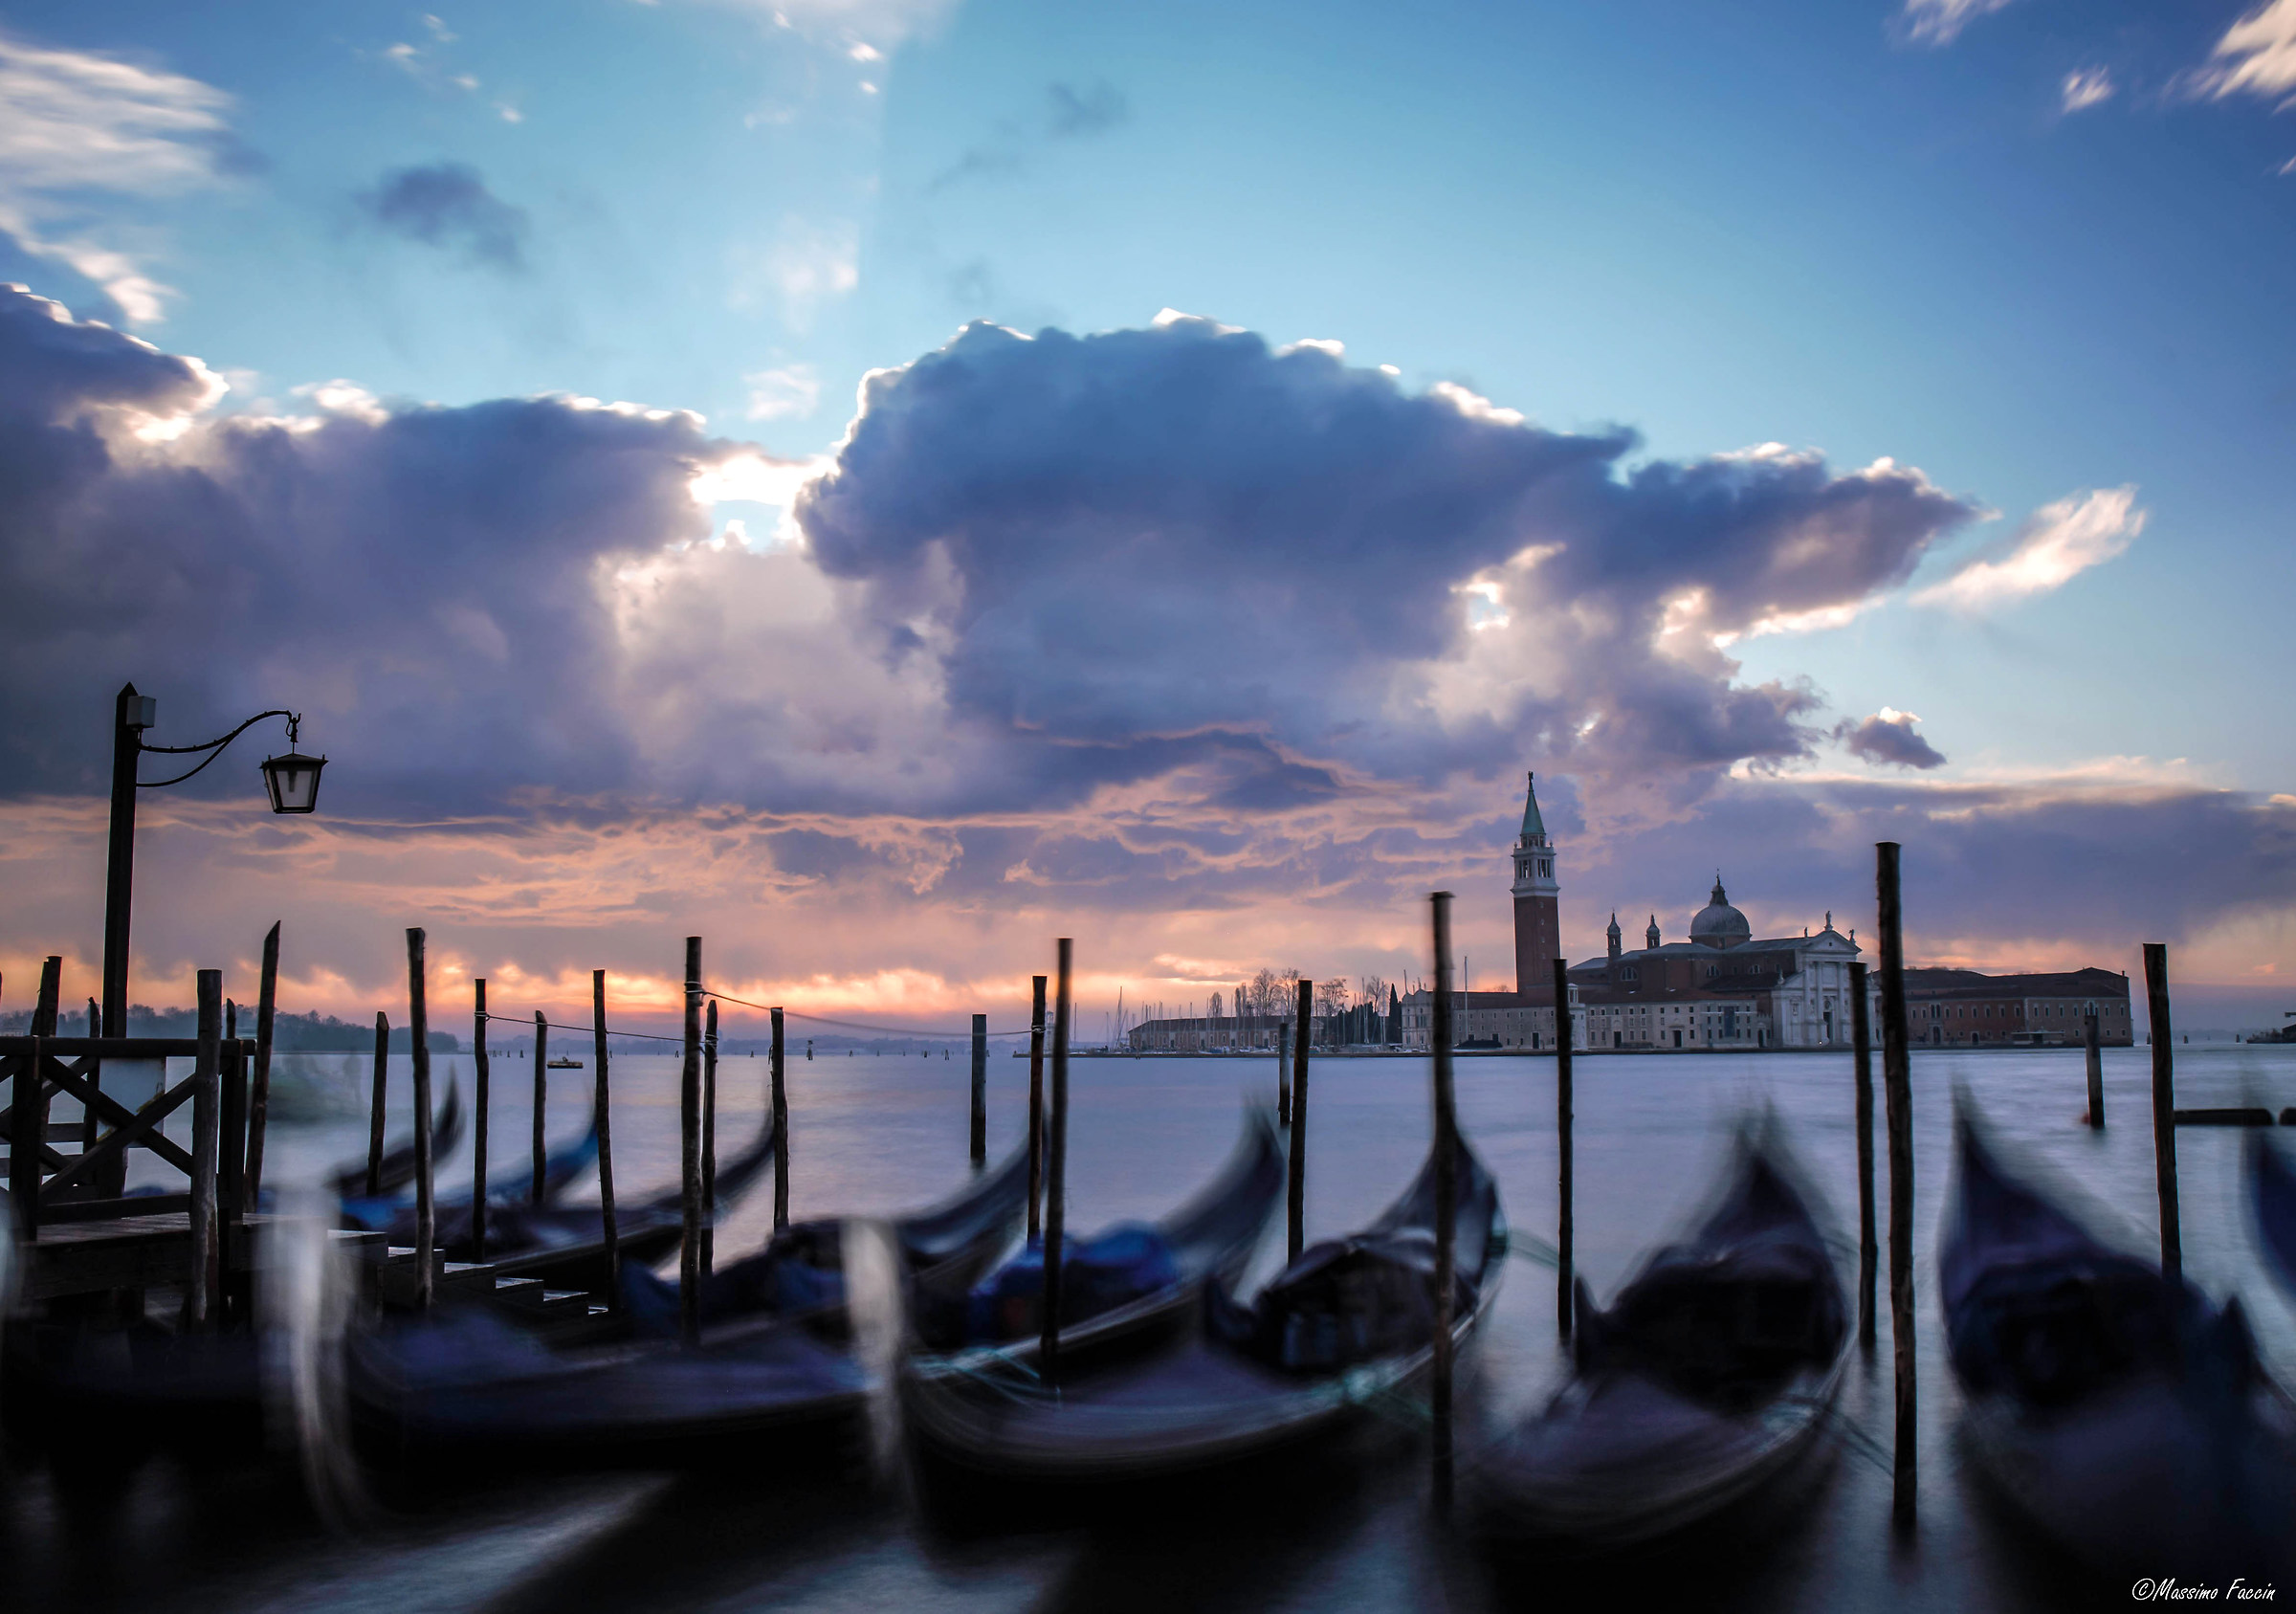 Venice at dawn...